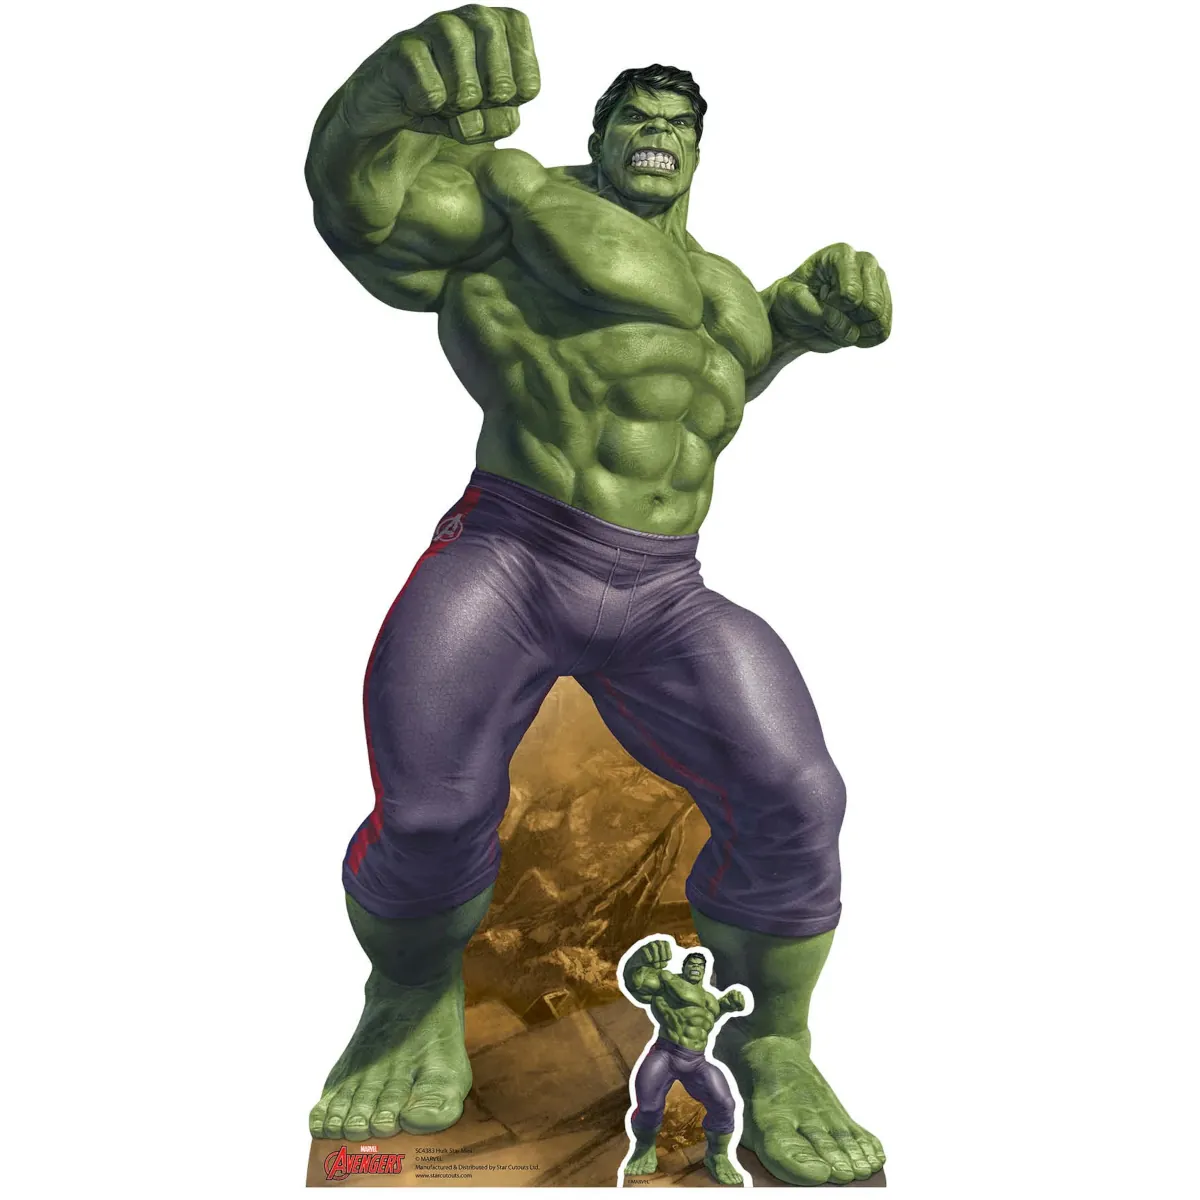 SC4383 The Incredible Hulk 'Comic Book Art' (Marvel Avengers) Mini + Tabletop Cardboard Cutout Standee Front